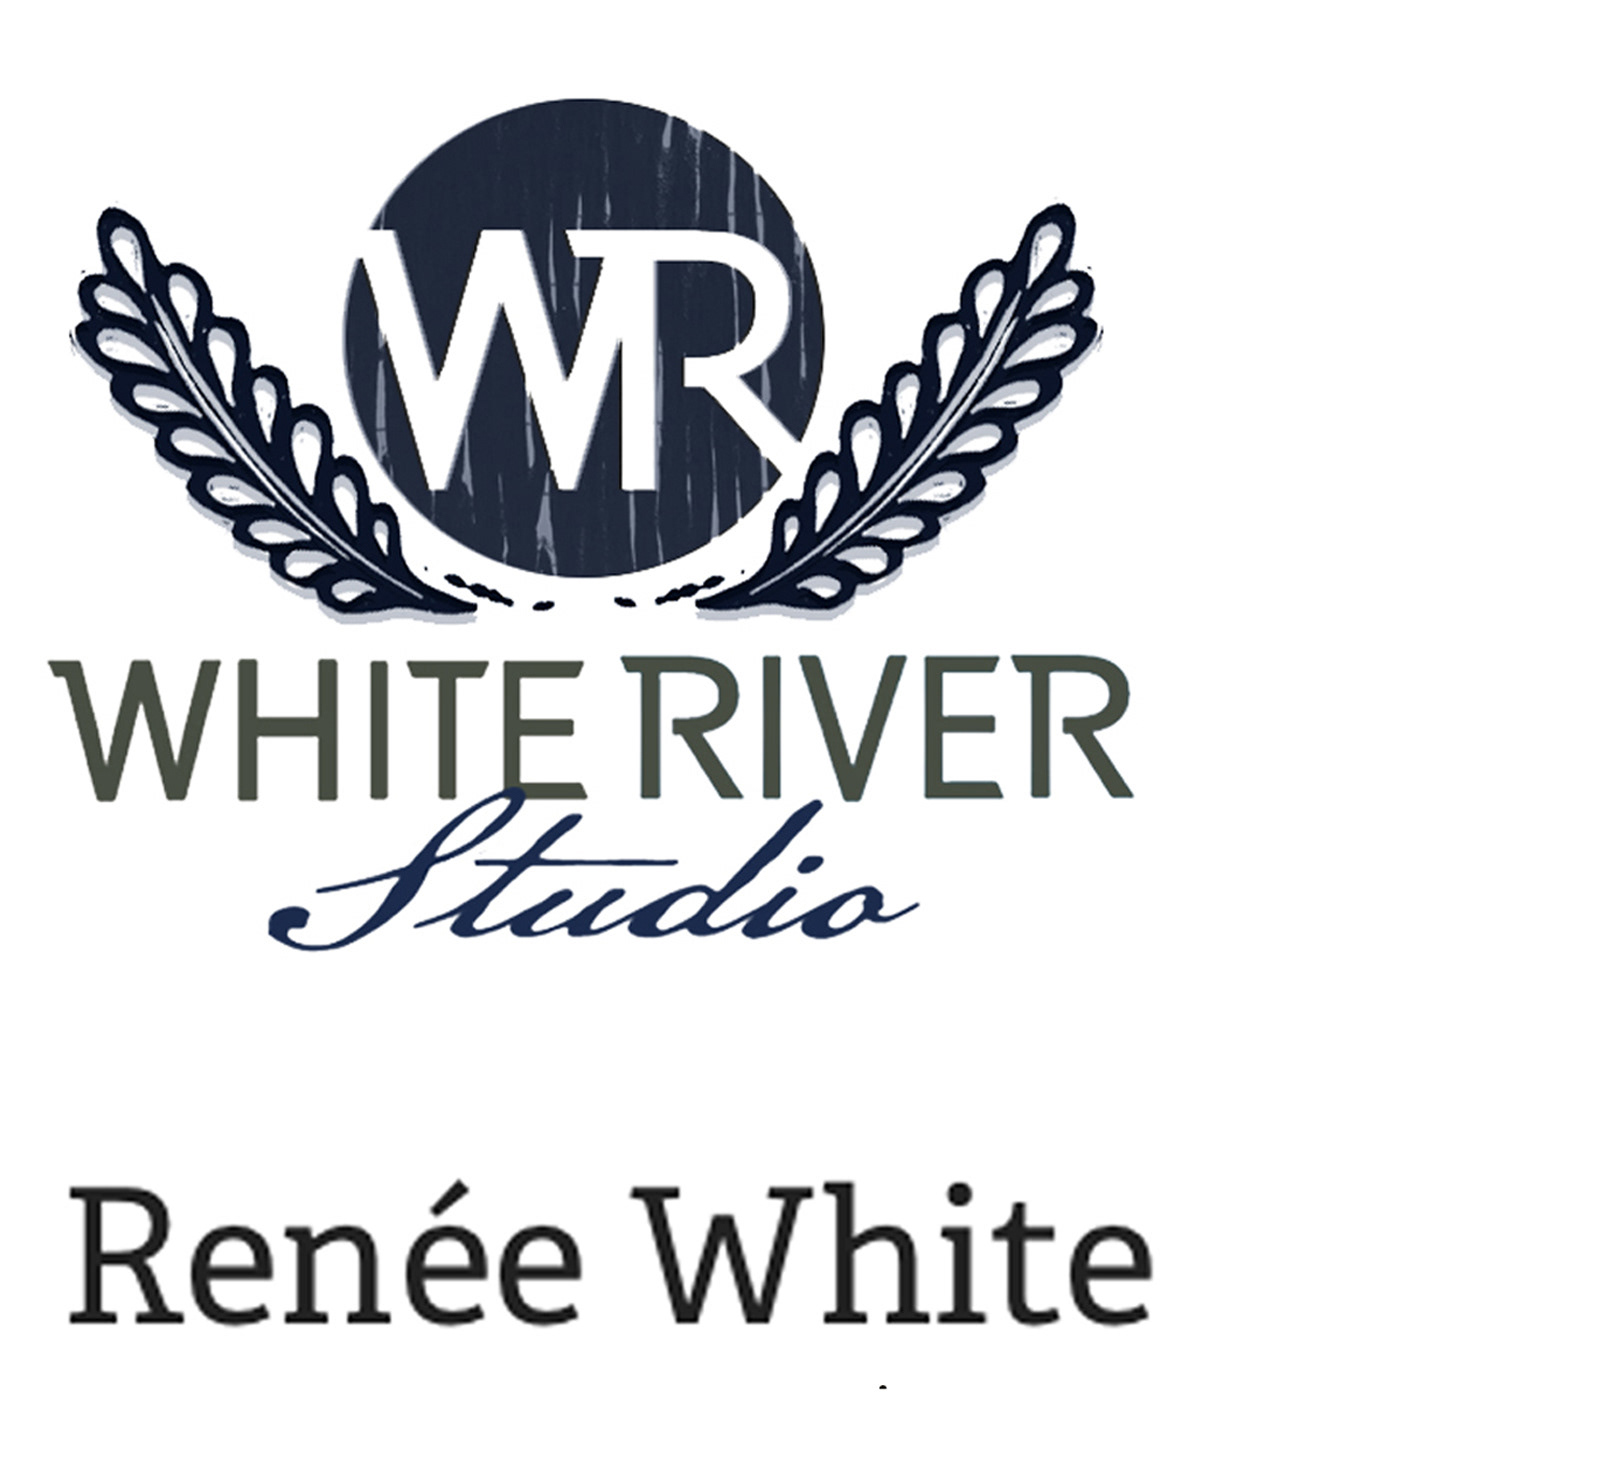 A Renee White